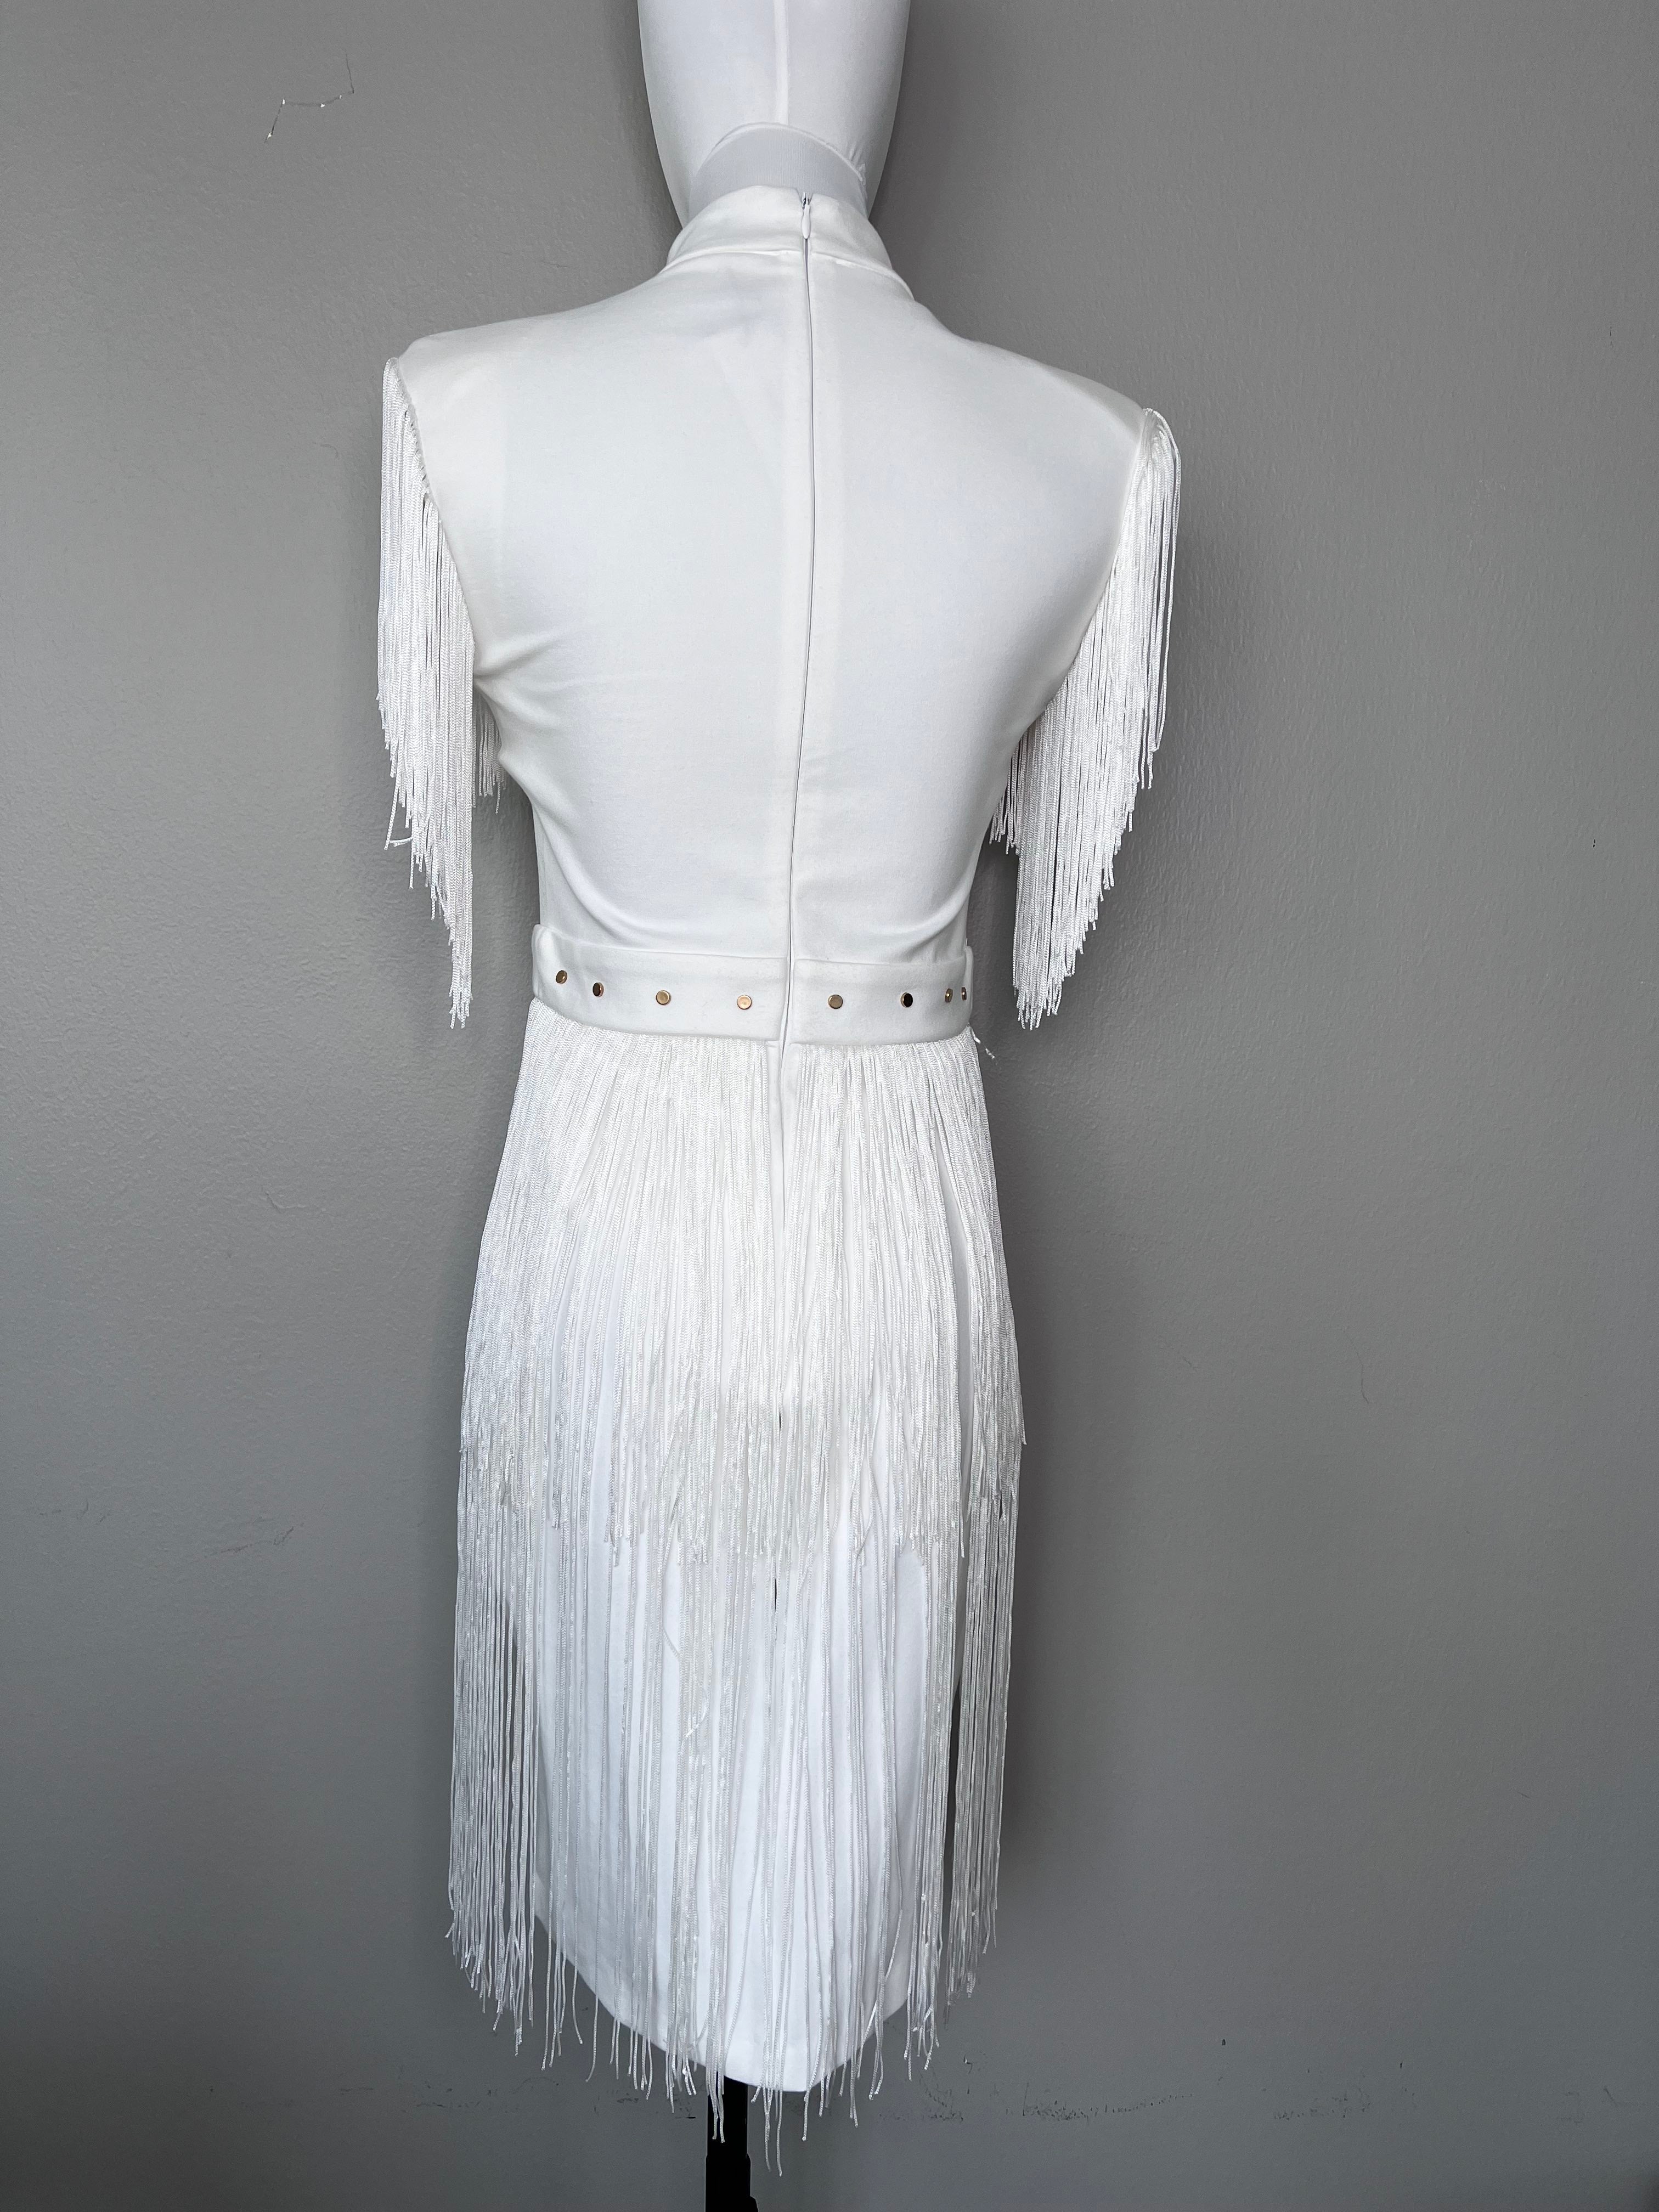 Brand New!limited edition white dress with fringe tassles - Karen Millen